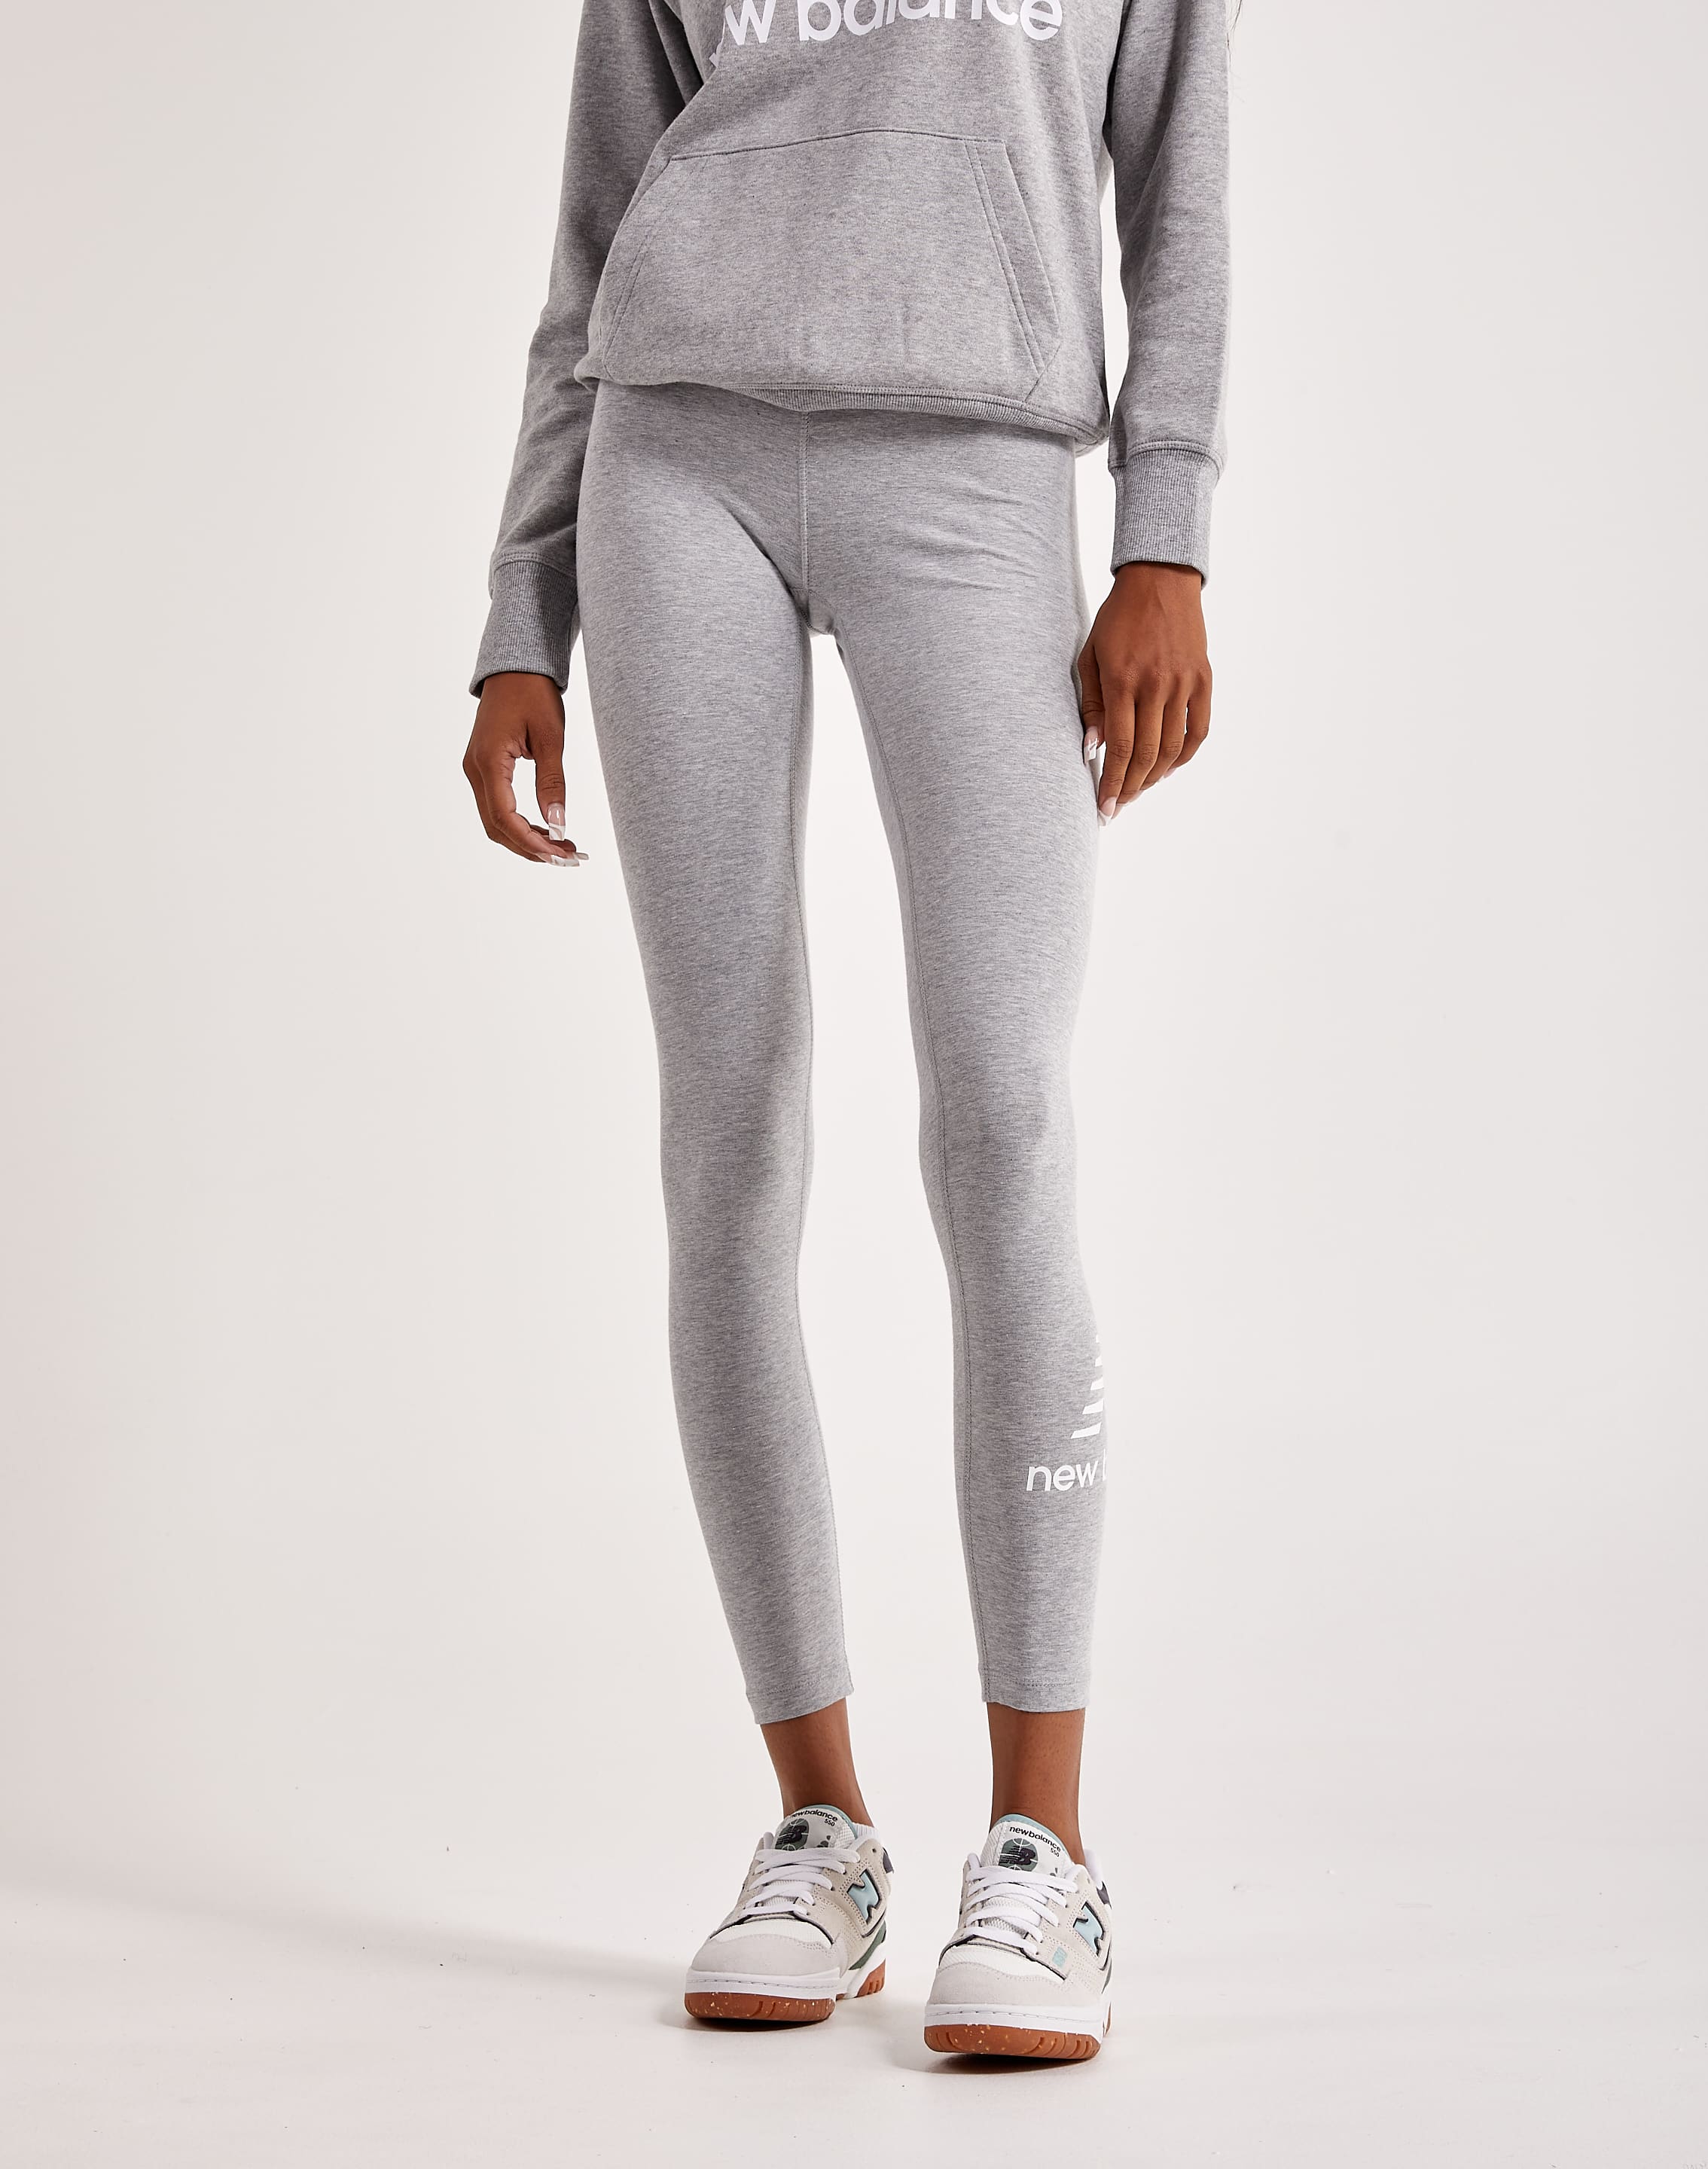 New Balance Women's NB Essentials Stacked Legging, Athletic Grey, Medium at   Women's Clothing store